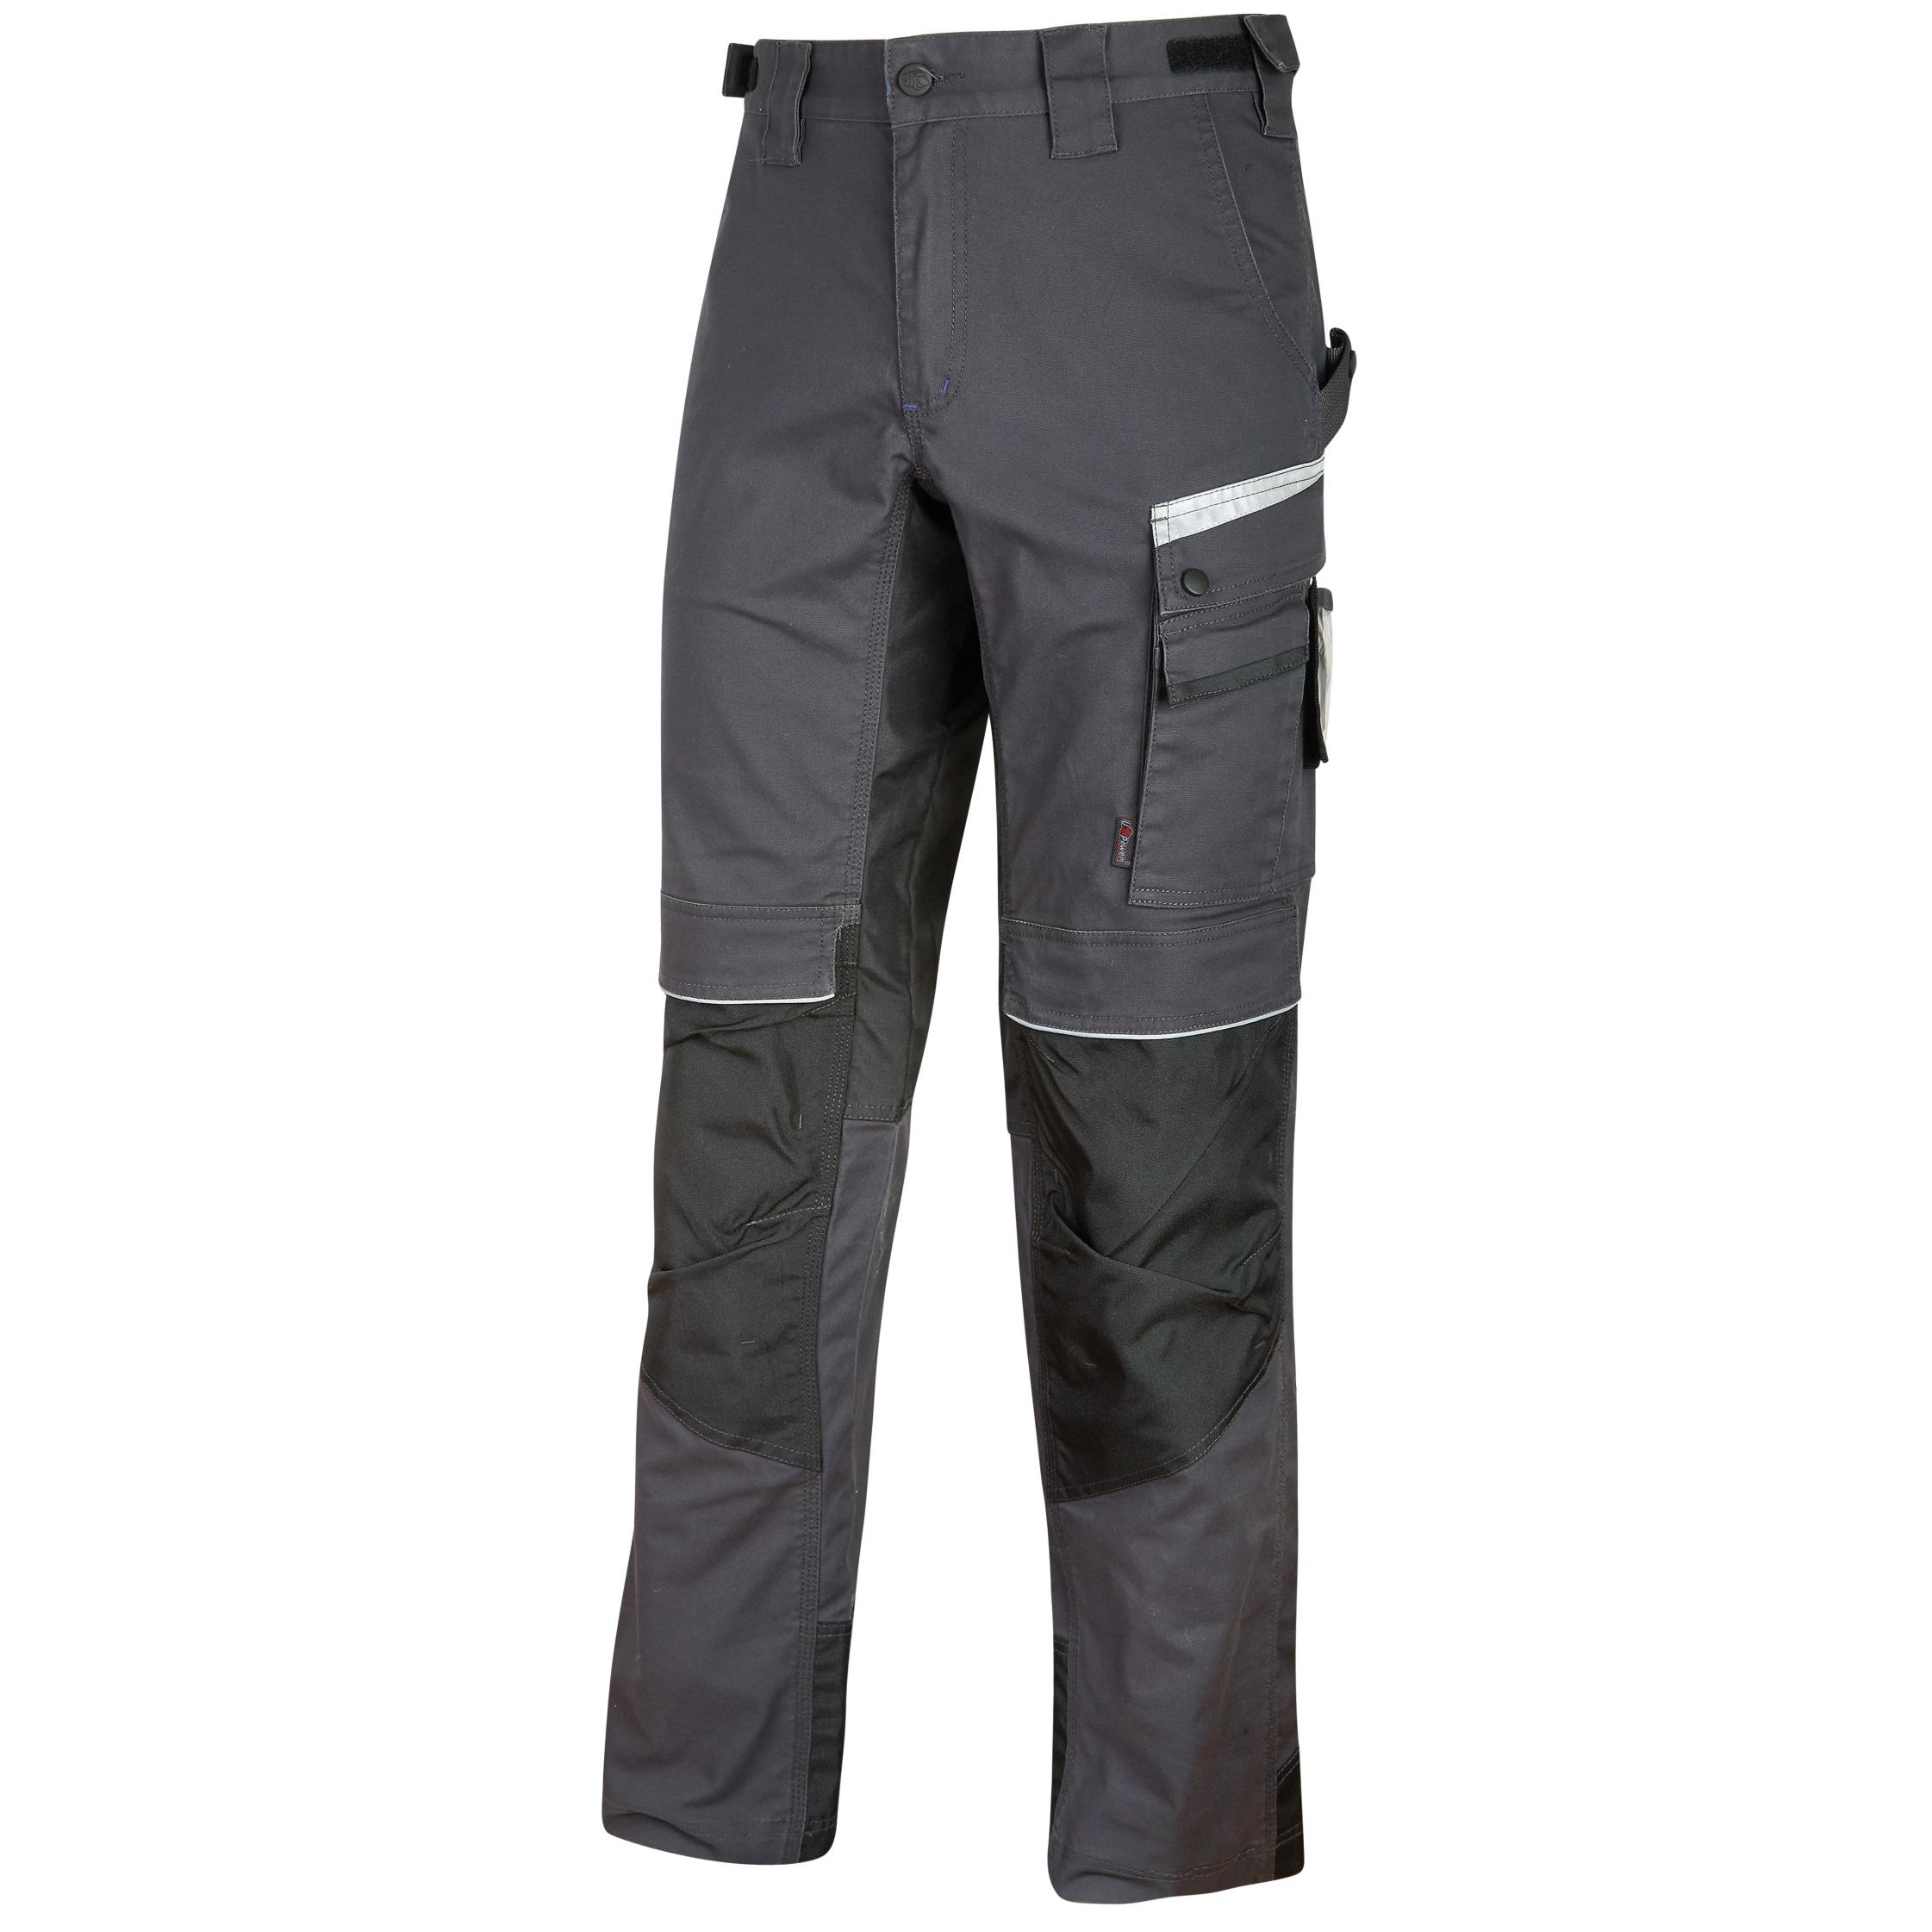 Pantalone da lavoro U-Power Flash, qualit e comodit